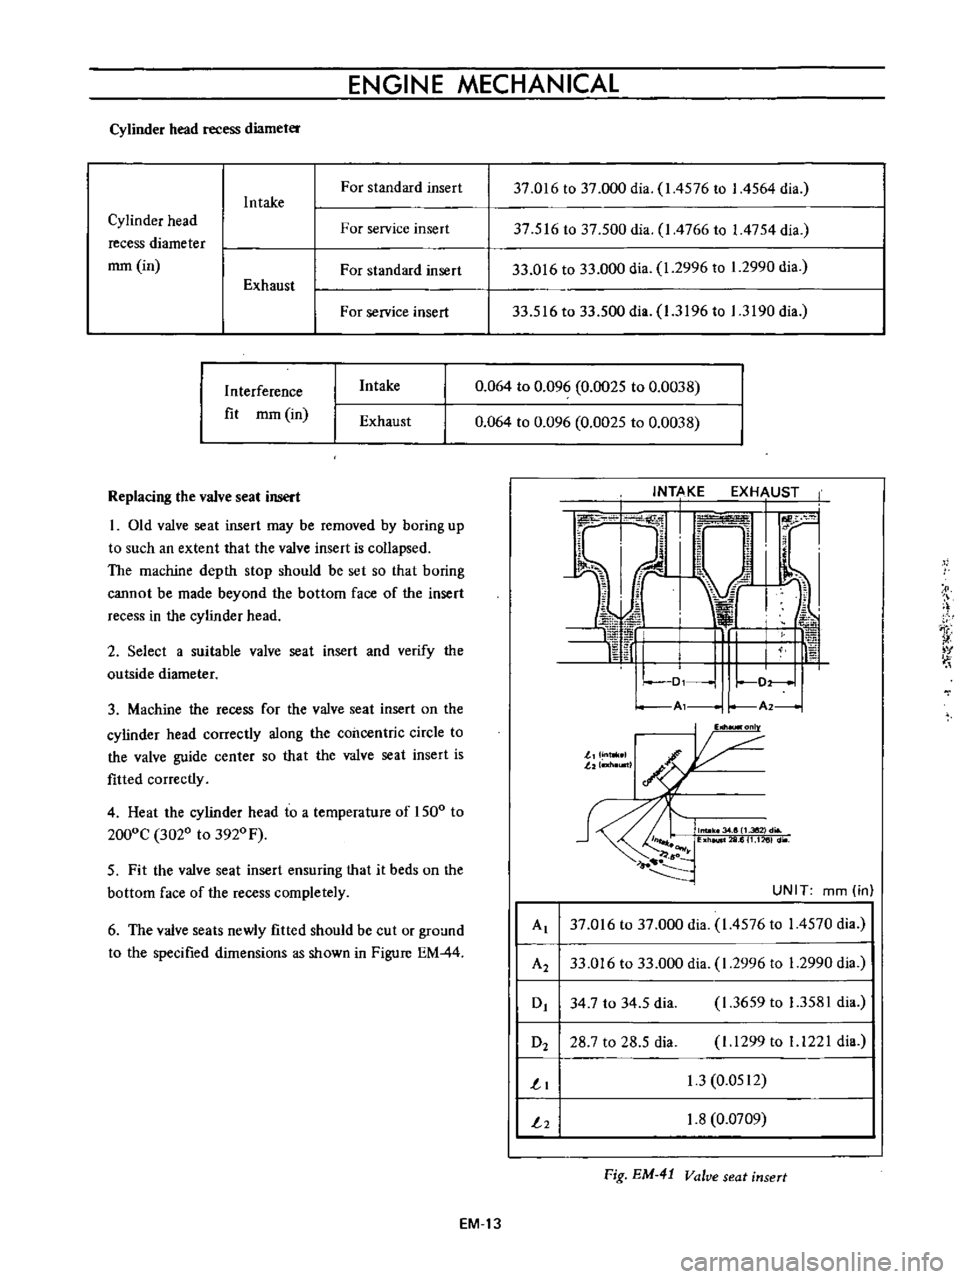 DATSUN B110 1973  Service Repair Manual 
ENGINE 
MECHANICAL

Cylinder 
head 
recess 
diameter

For

standard 
insert

Intake

Cylinder 
head

recess 
diameter

mm 
in 
For 
service 
insert

For 
standard 
insert

Exhaust

For

service 
inse